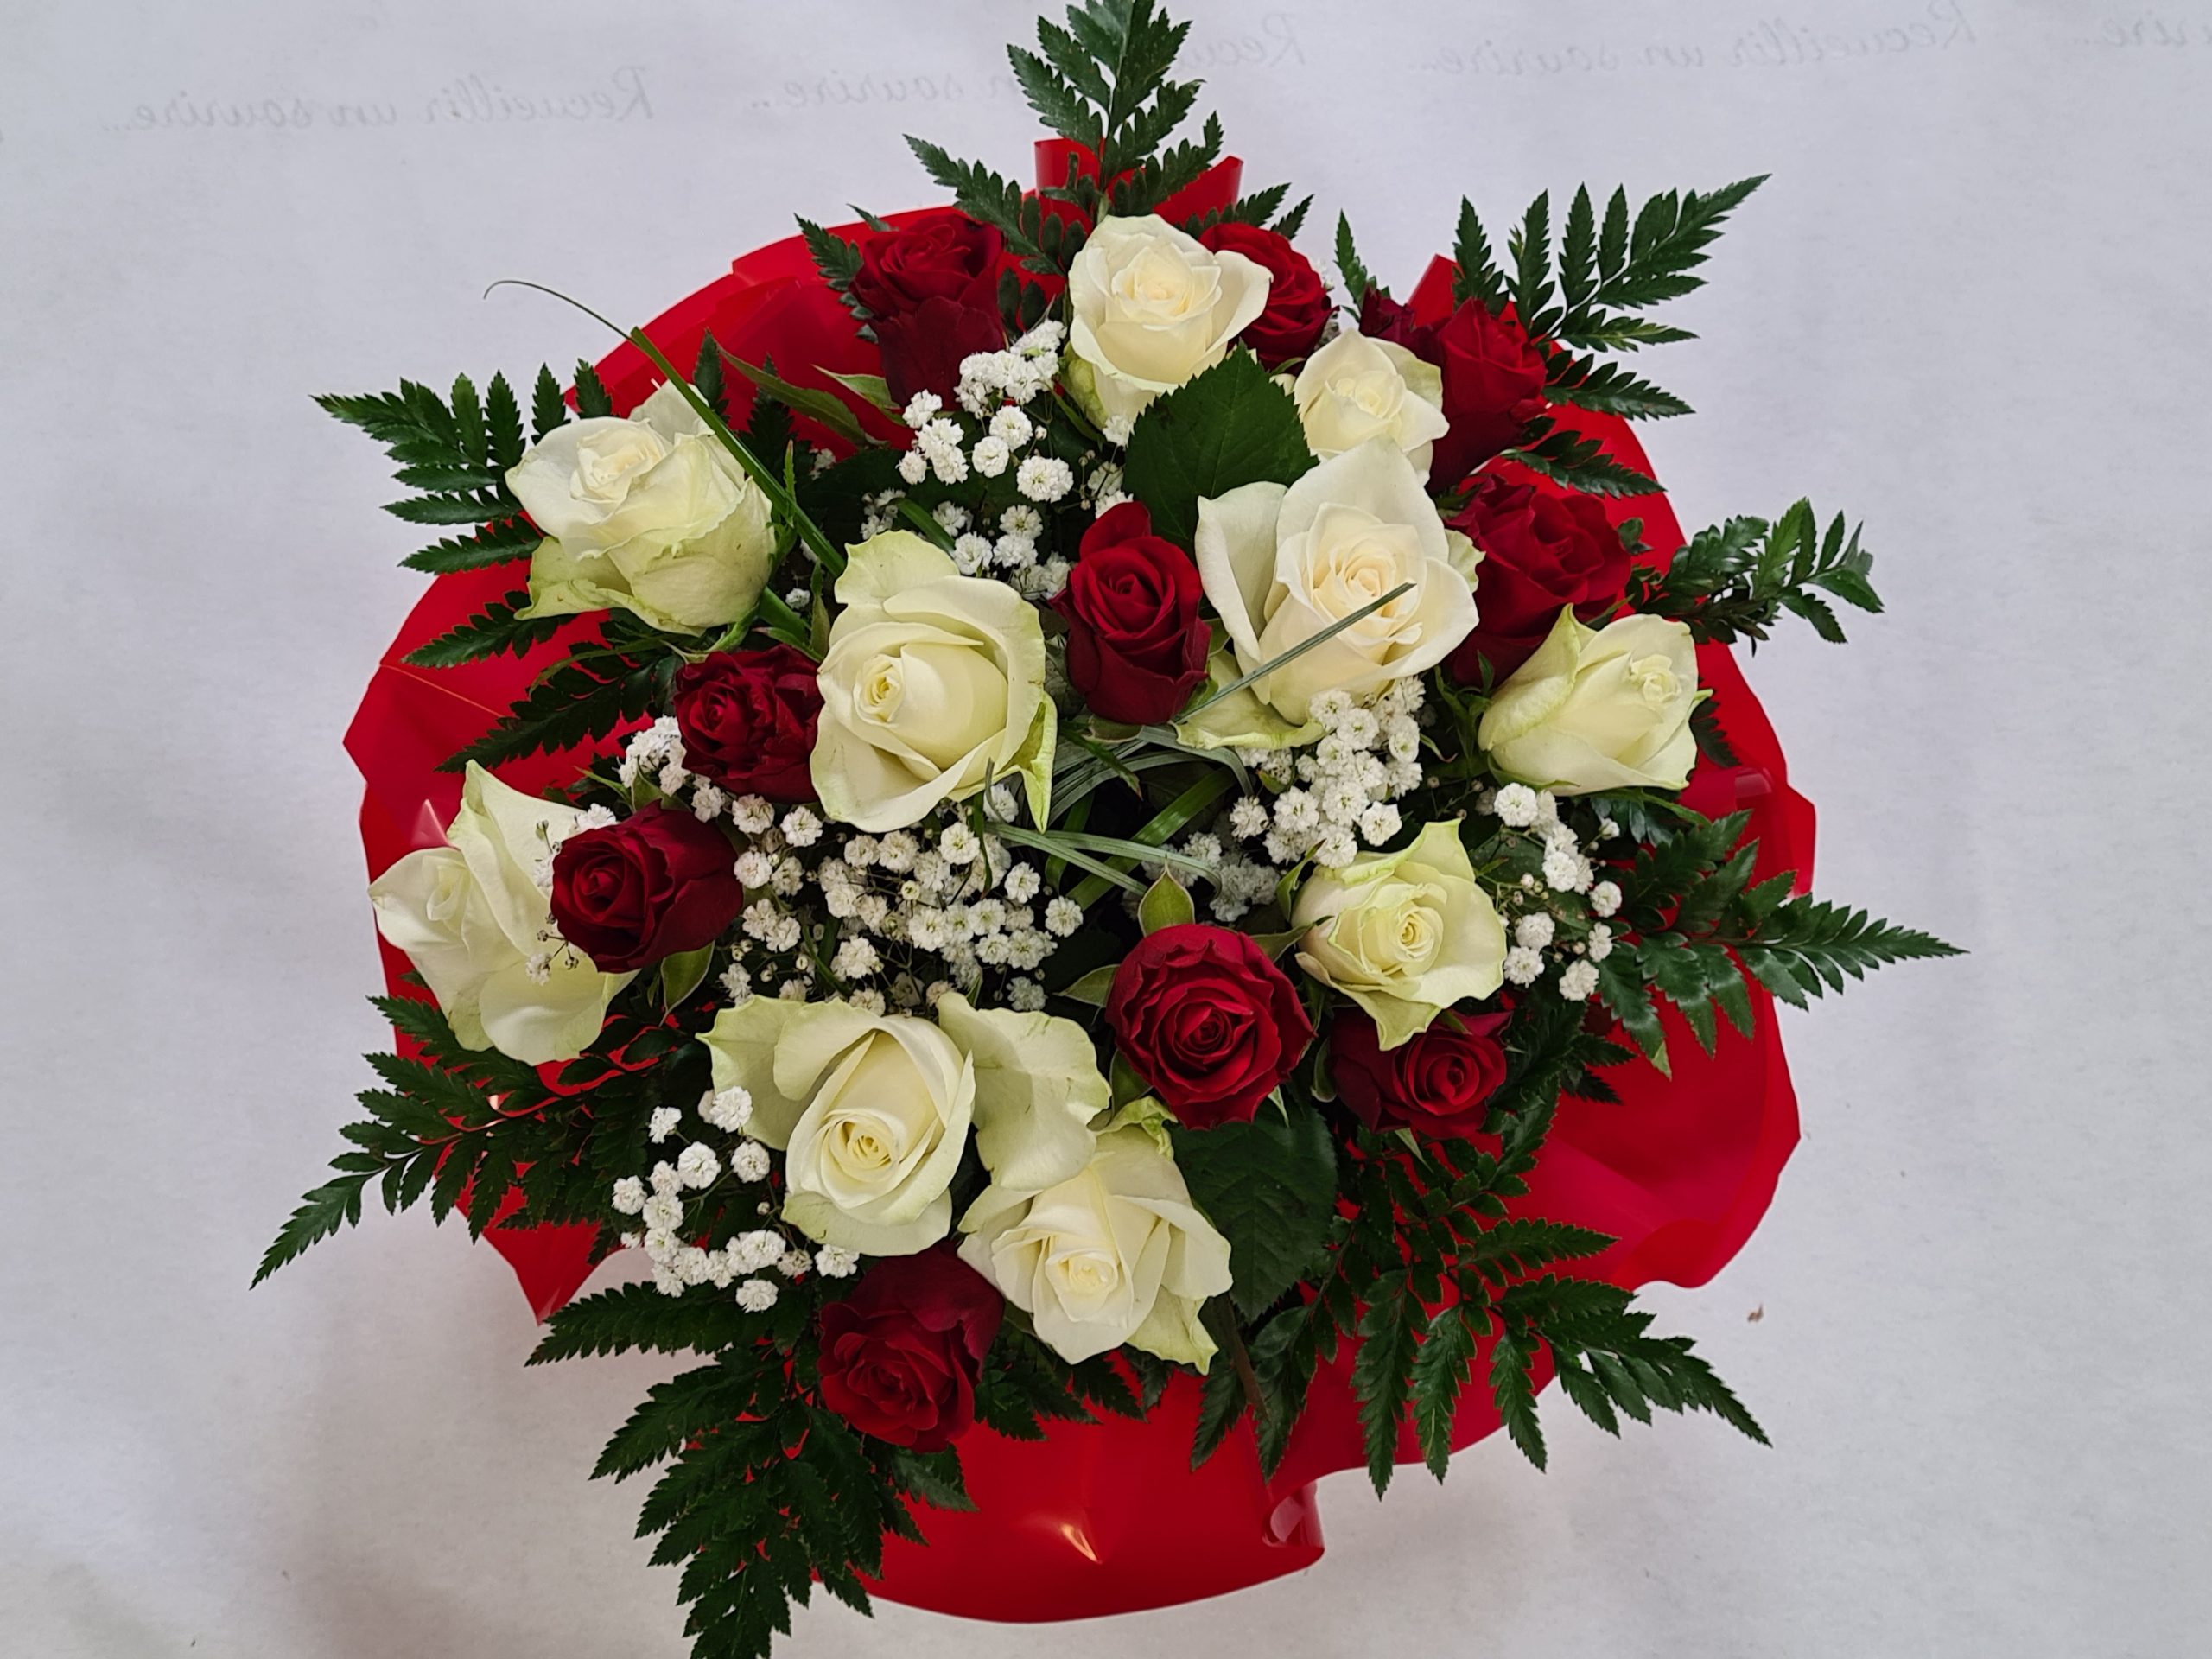 Stella – 10 ROSES ROUGE 10 ROSES BLANCHE GYPSOPHILE FEUILLAGE – Achetez vos  fleurs